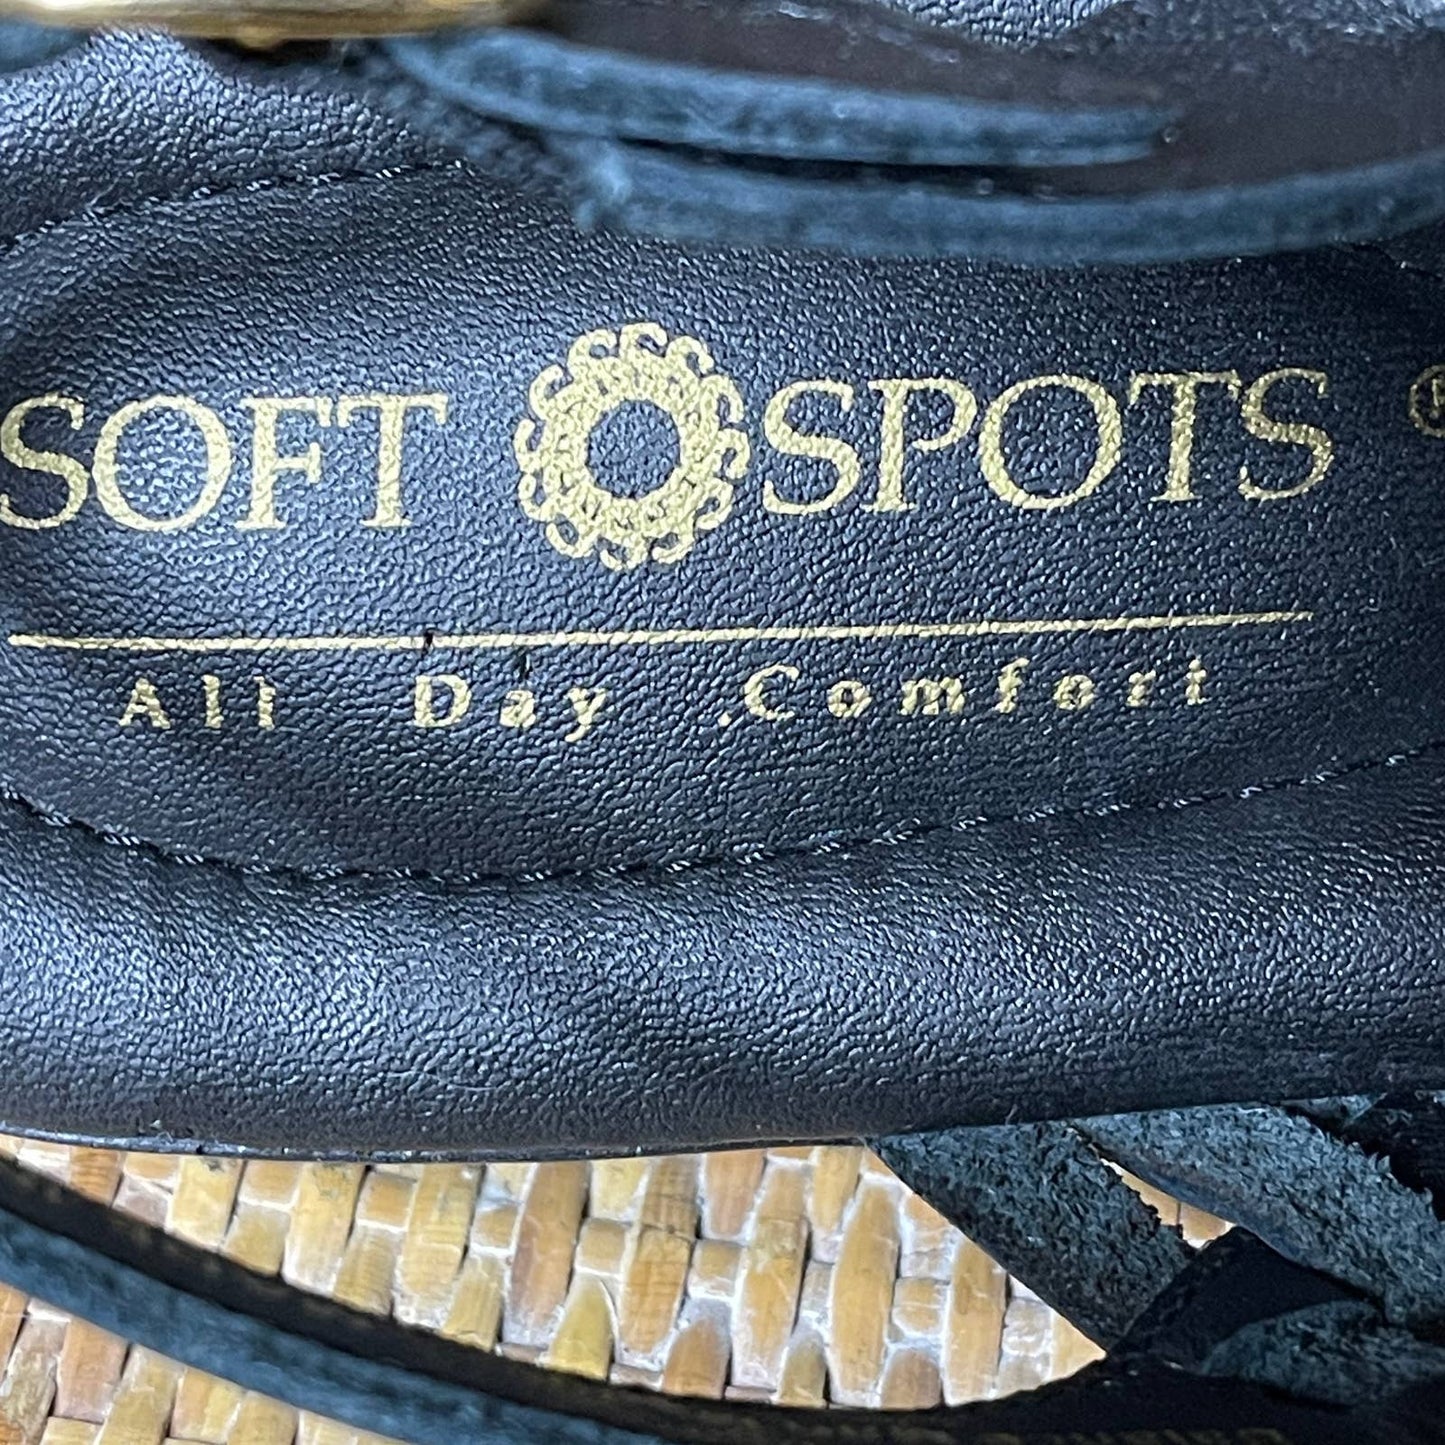 Vintage 90s Black Leather Huarache Sandals Open Toe by Soft Spots Size 11